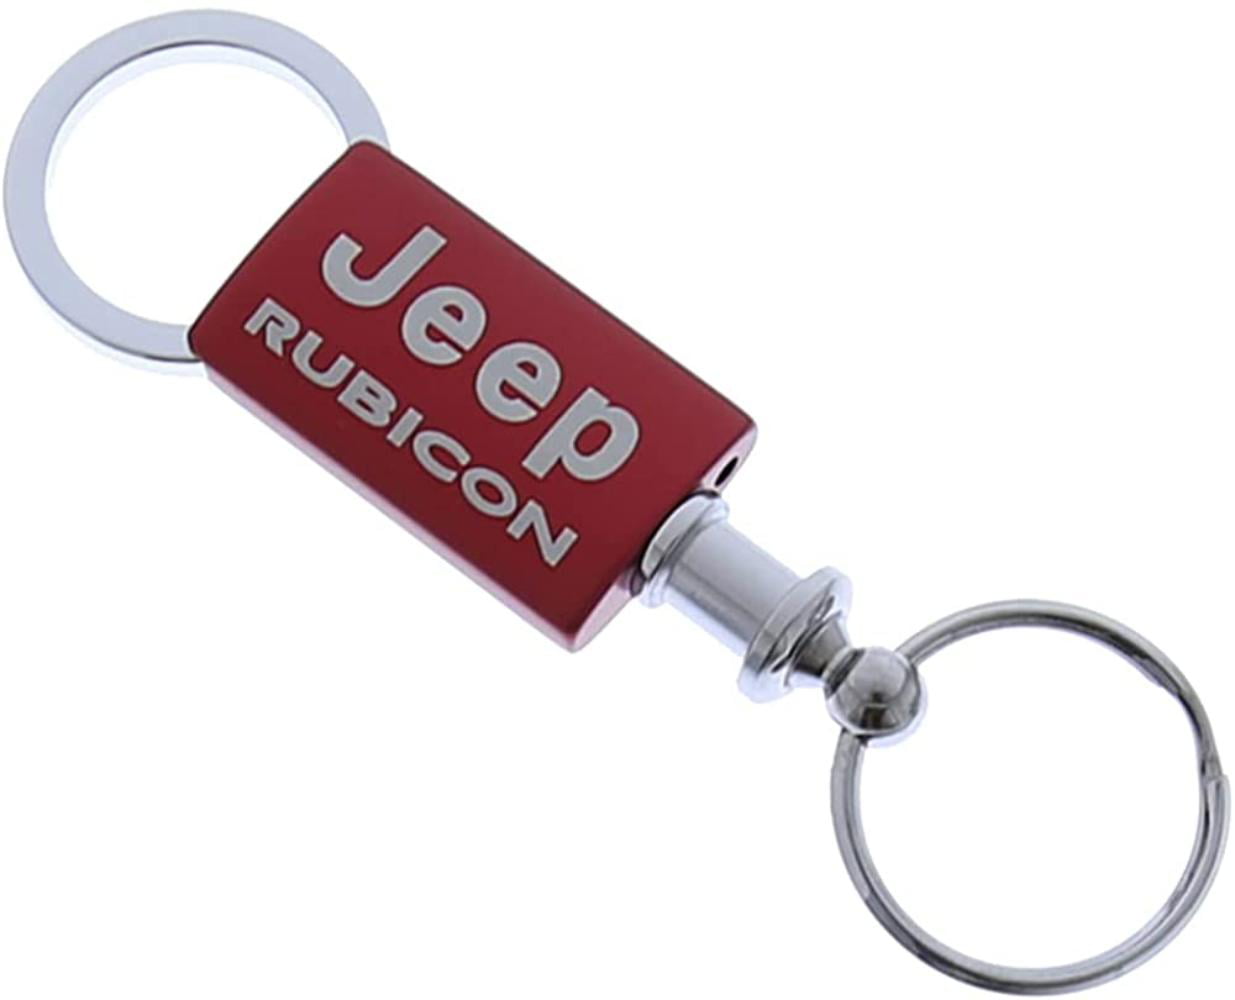 Jeep Keychain VEHICLE Logo Chrome Valet Key Fob Metal Key Ring Lanyard mopar